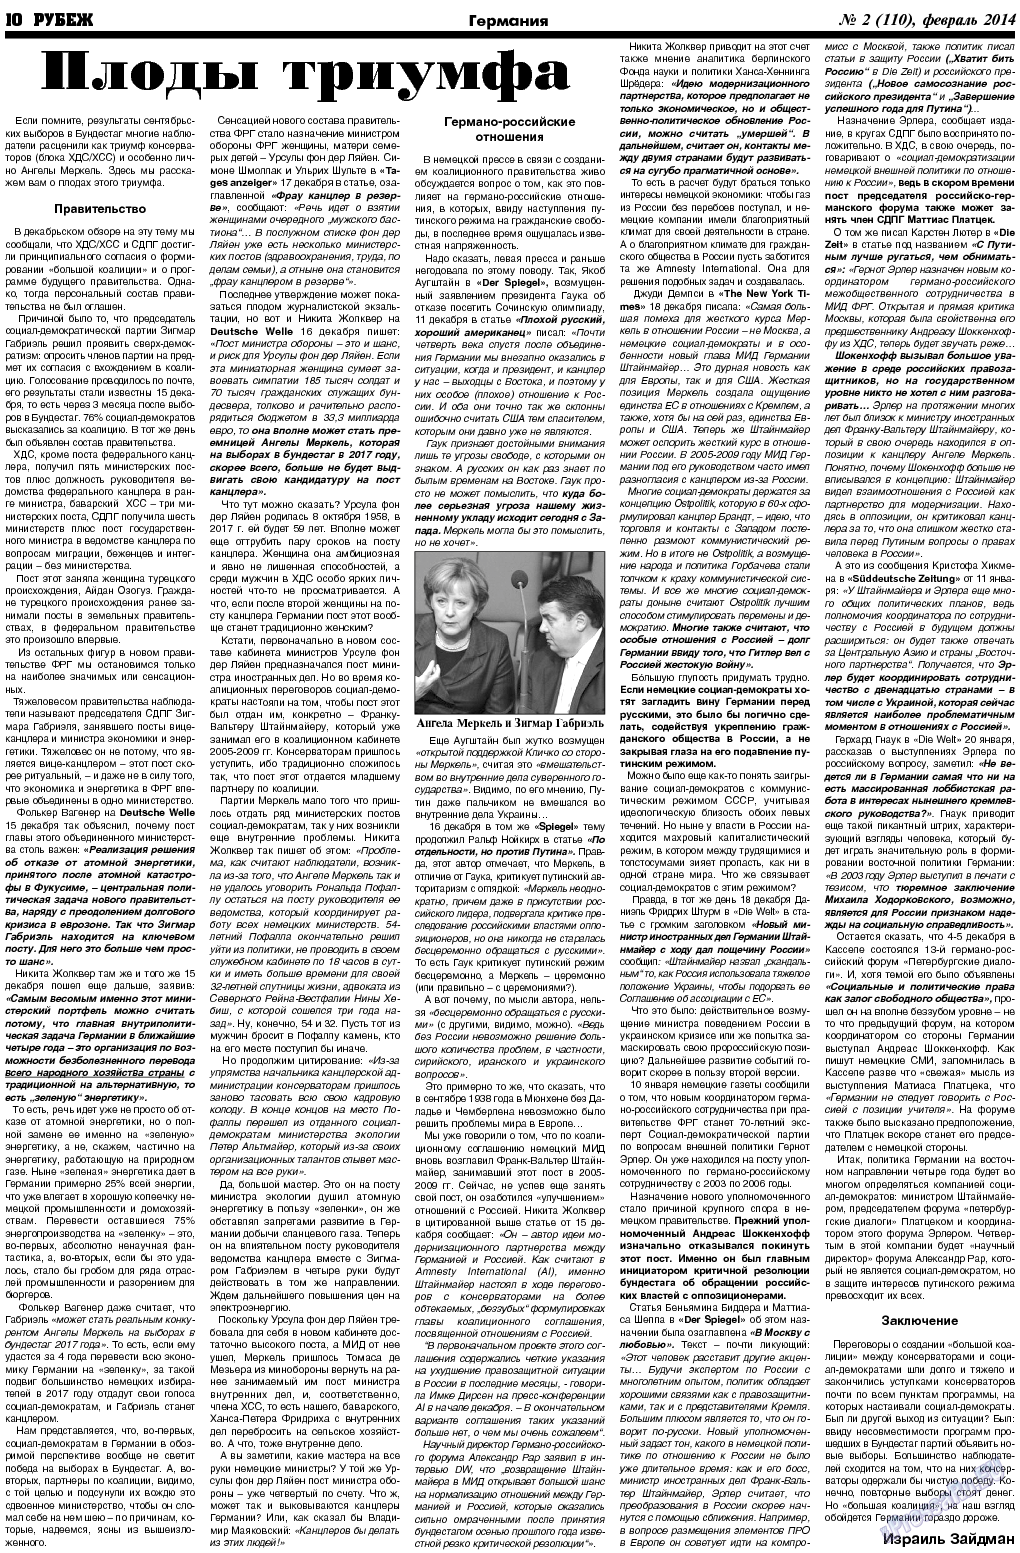 Рубеж, газета. 2014 №2 стр.10